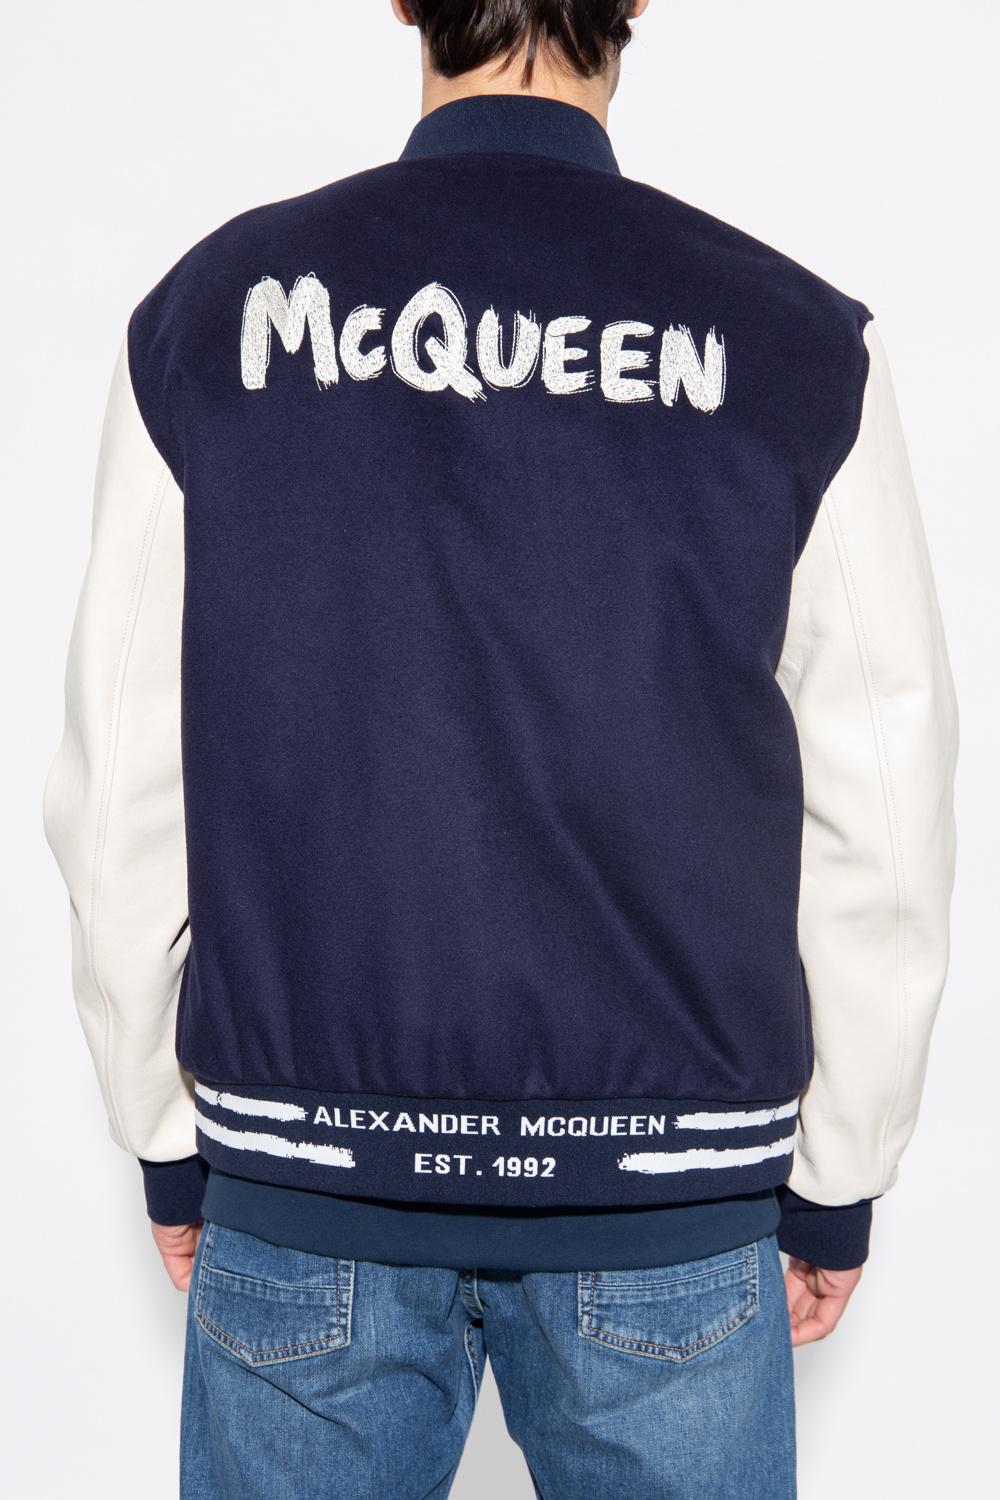 Alexander McQueen Wool Bomber Jacket in Navy Blue (Blue) for Men | Lyst